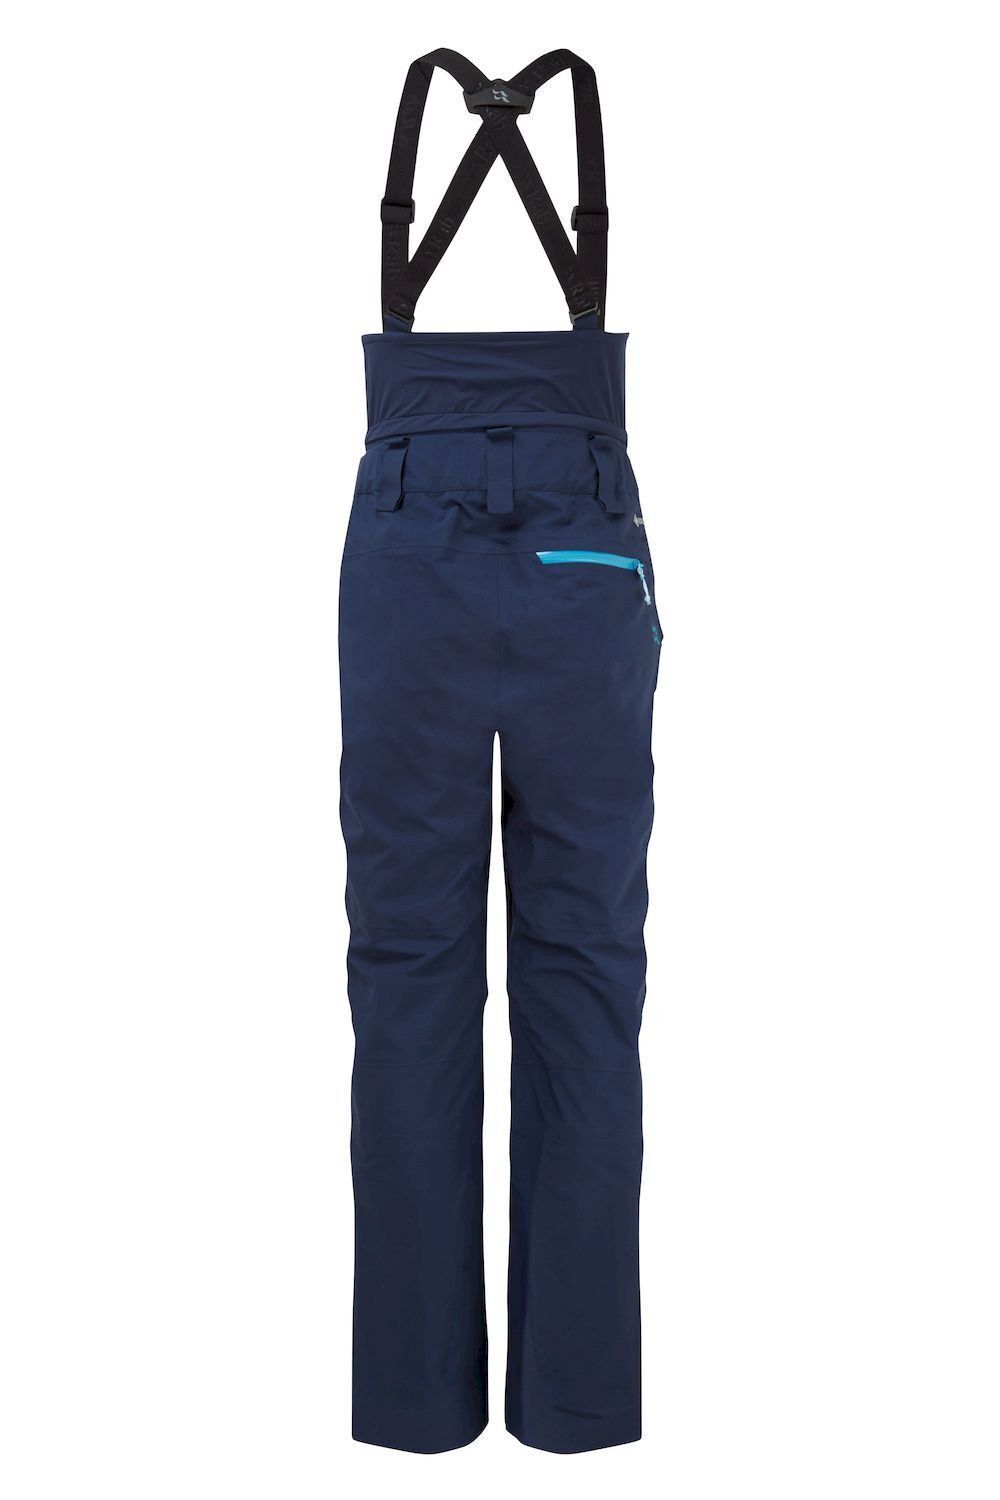 Rab Khroma GTX Bib - Ski pants - Men's